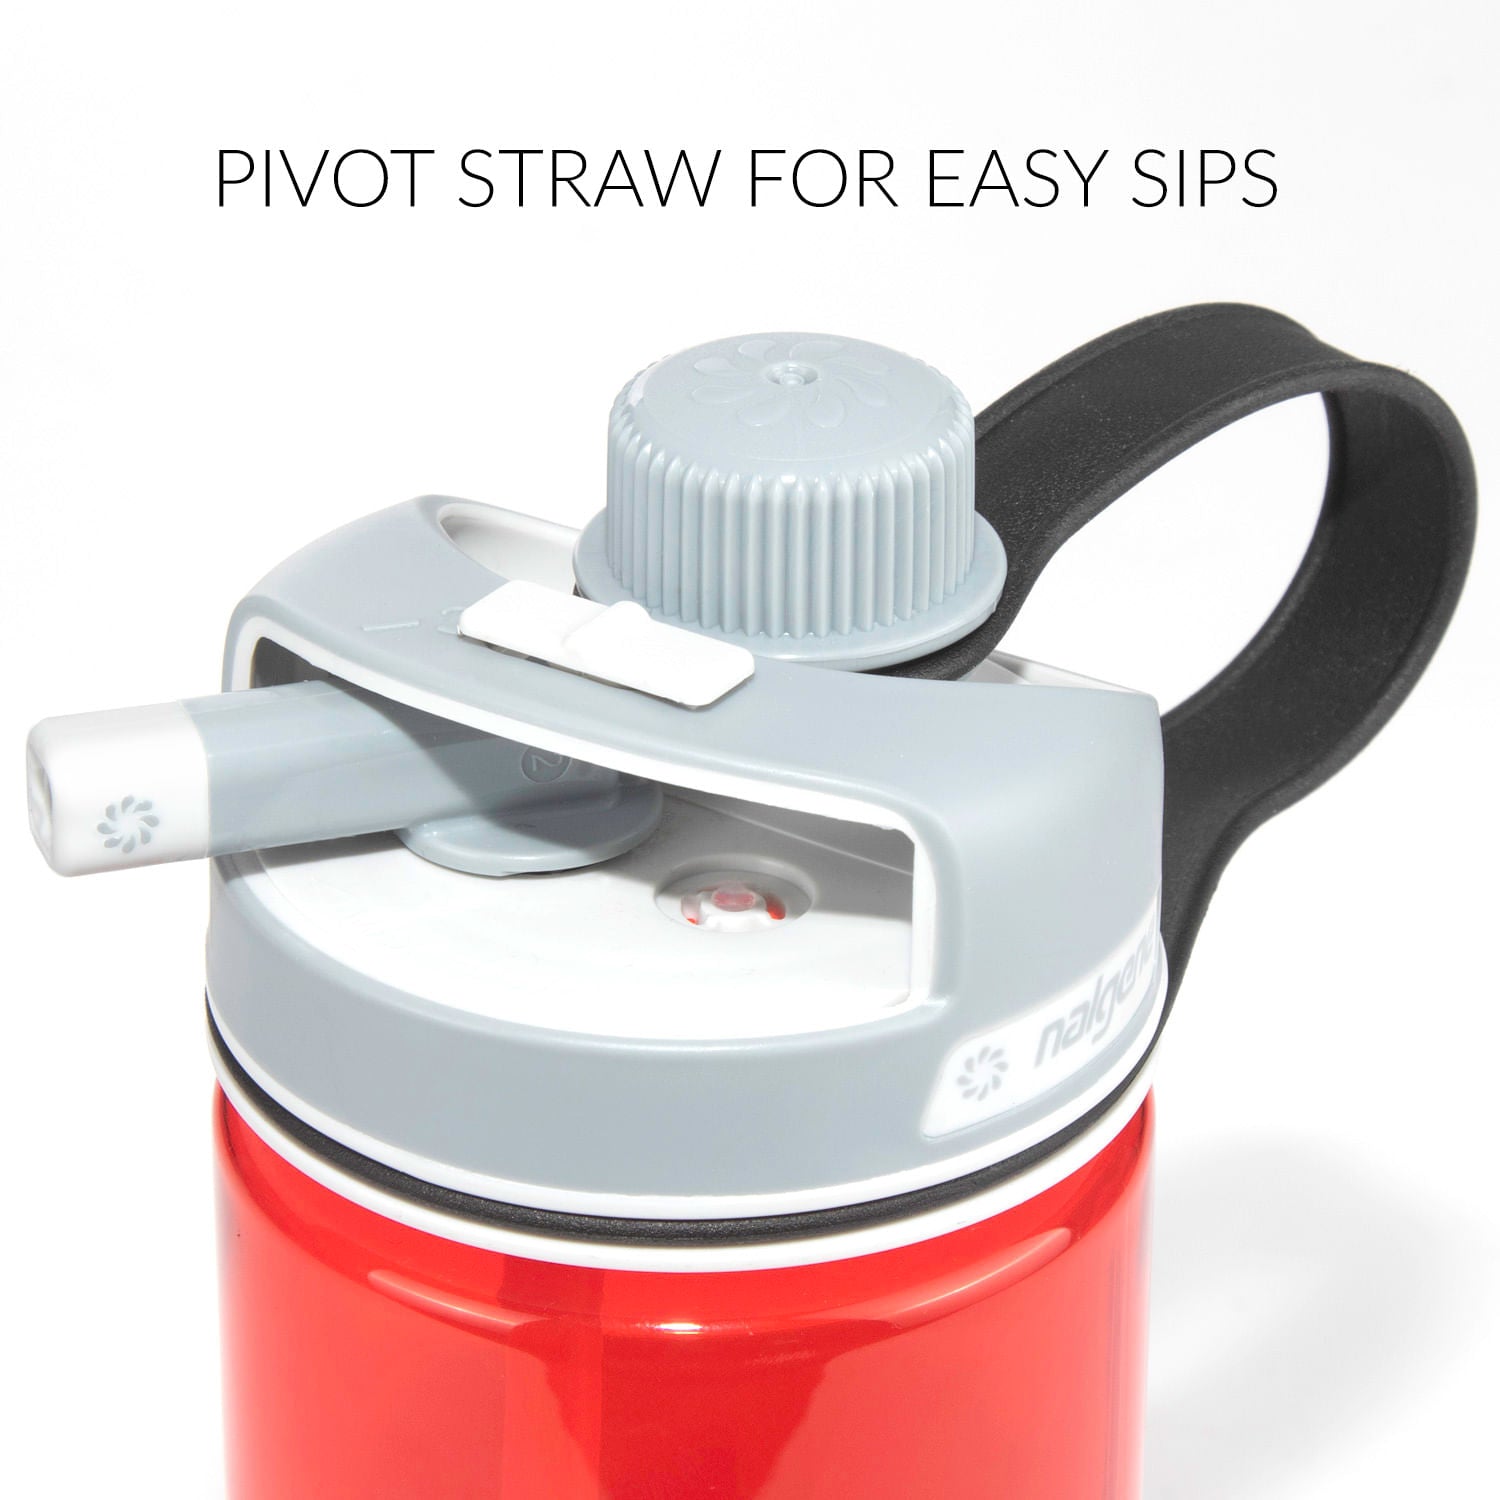 Pivot straw for easy sips.